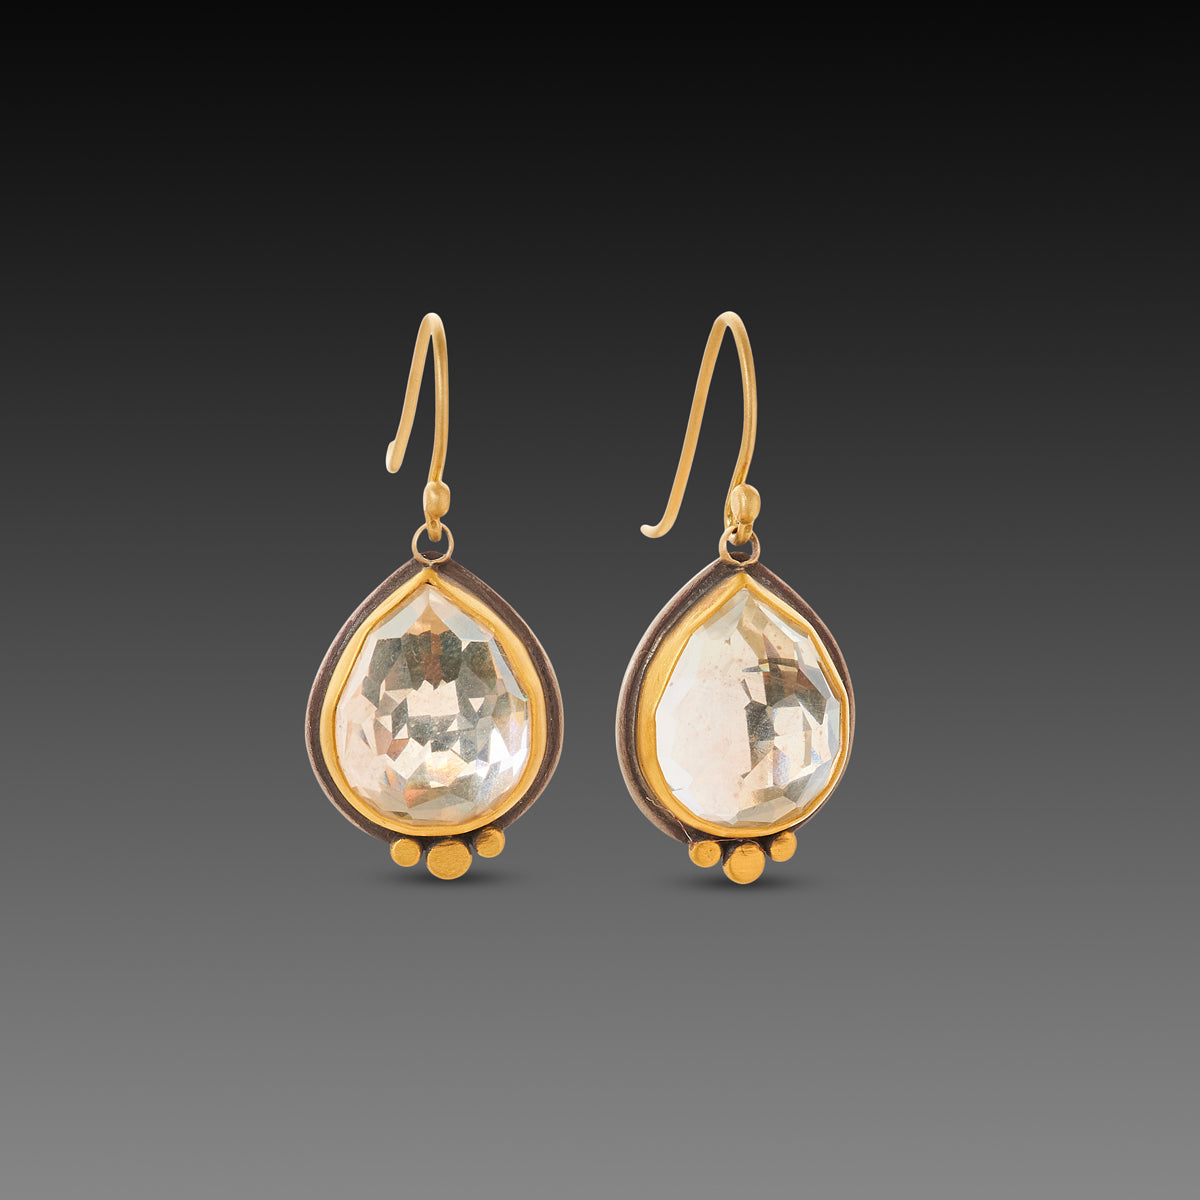 Buy quality 22k gold Handmade design earring in Ahmedabad